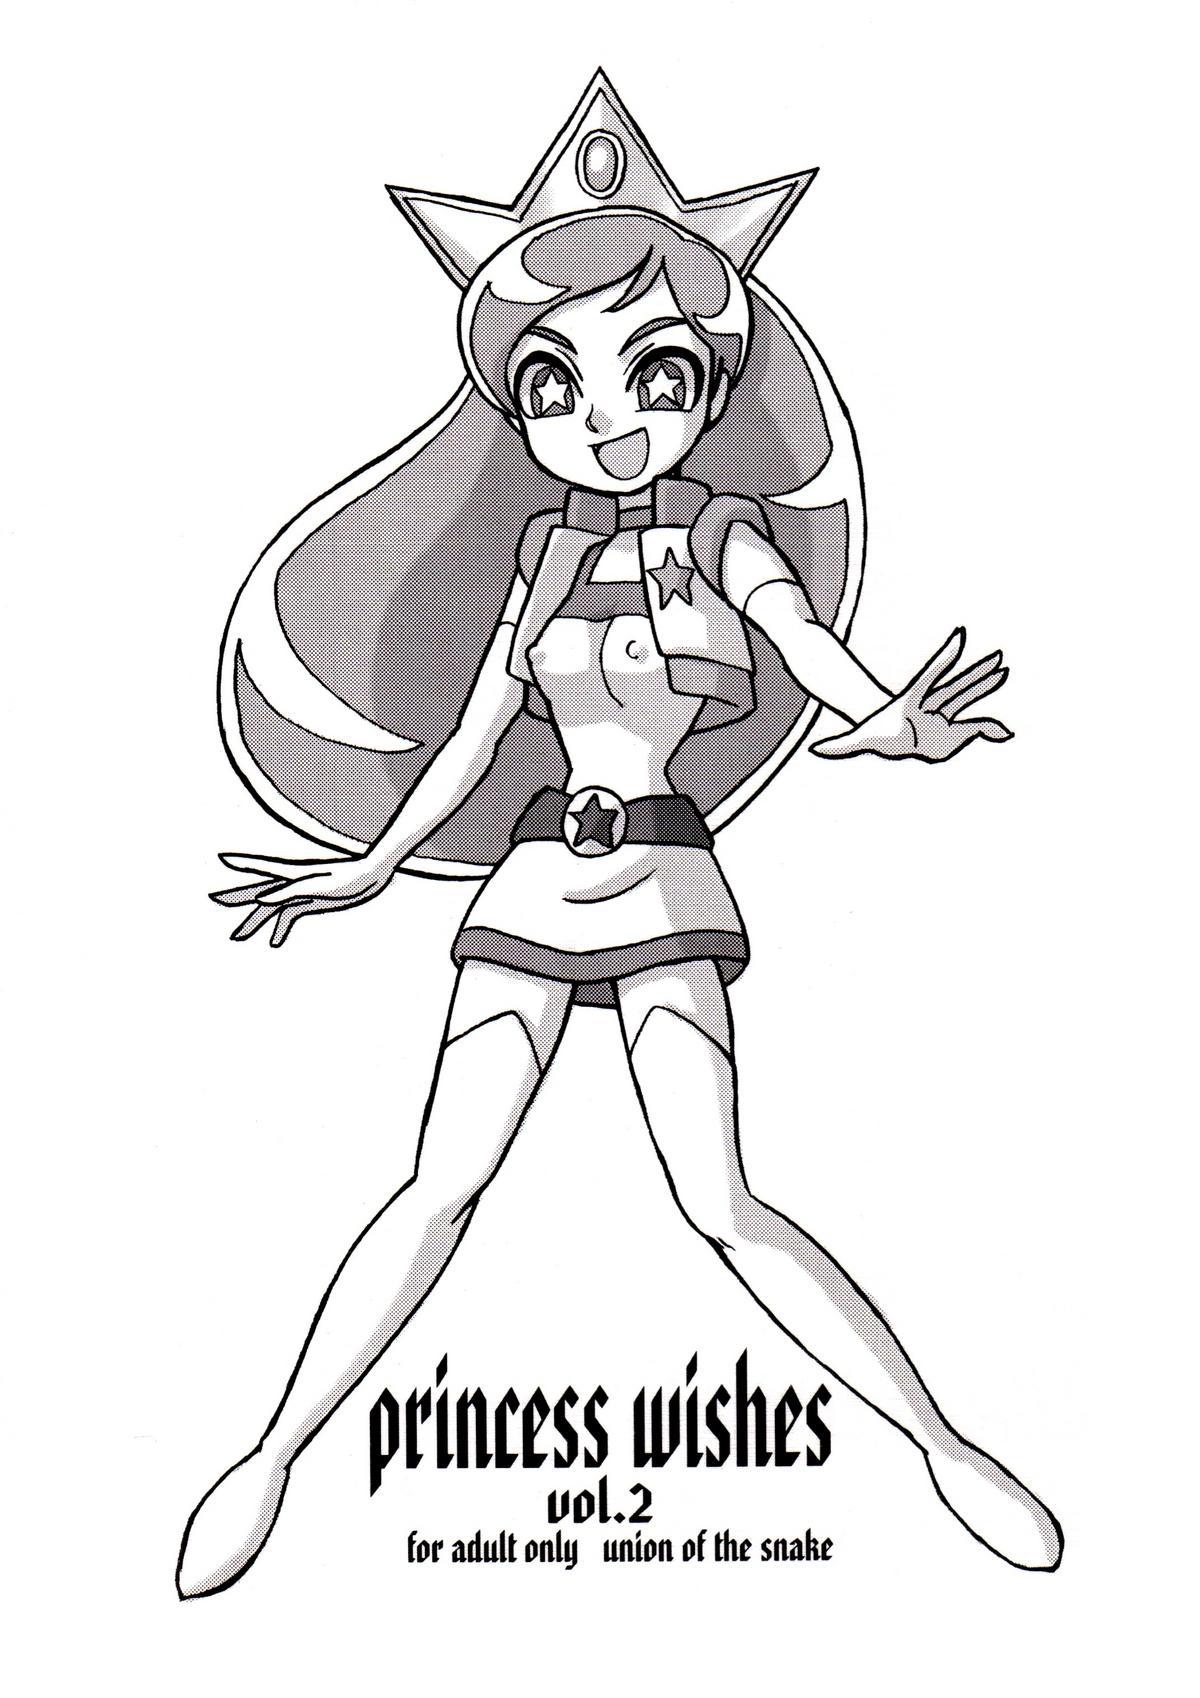 Kitchen princess wishes vol. 2 - Powerpuff girls z Cdmx - Page 1